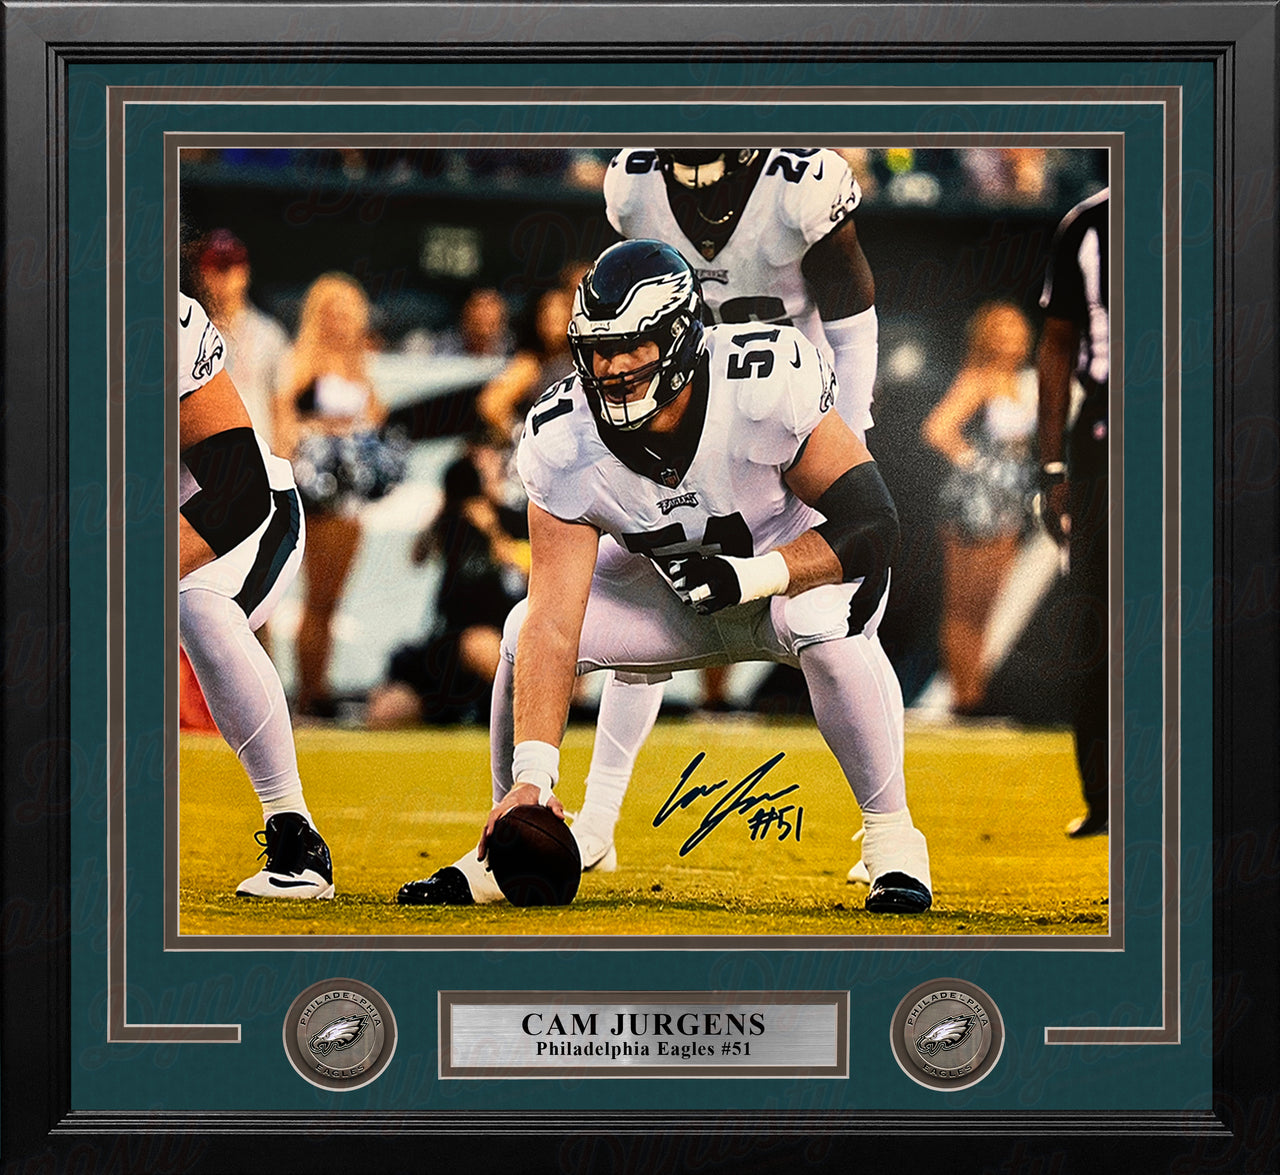 Cam Jurgens in Stance Philadelphia Eagles Autographed 11" x 14" Framed Football Photo - Dynasty Sports & Framing 